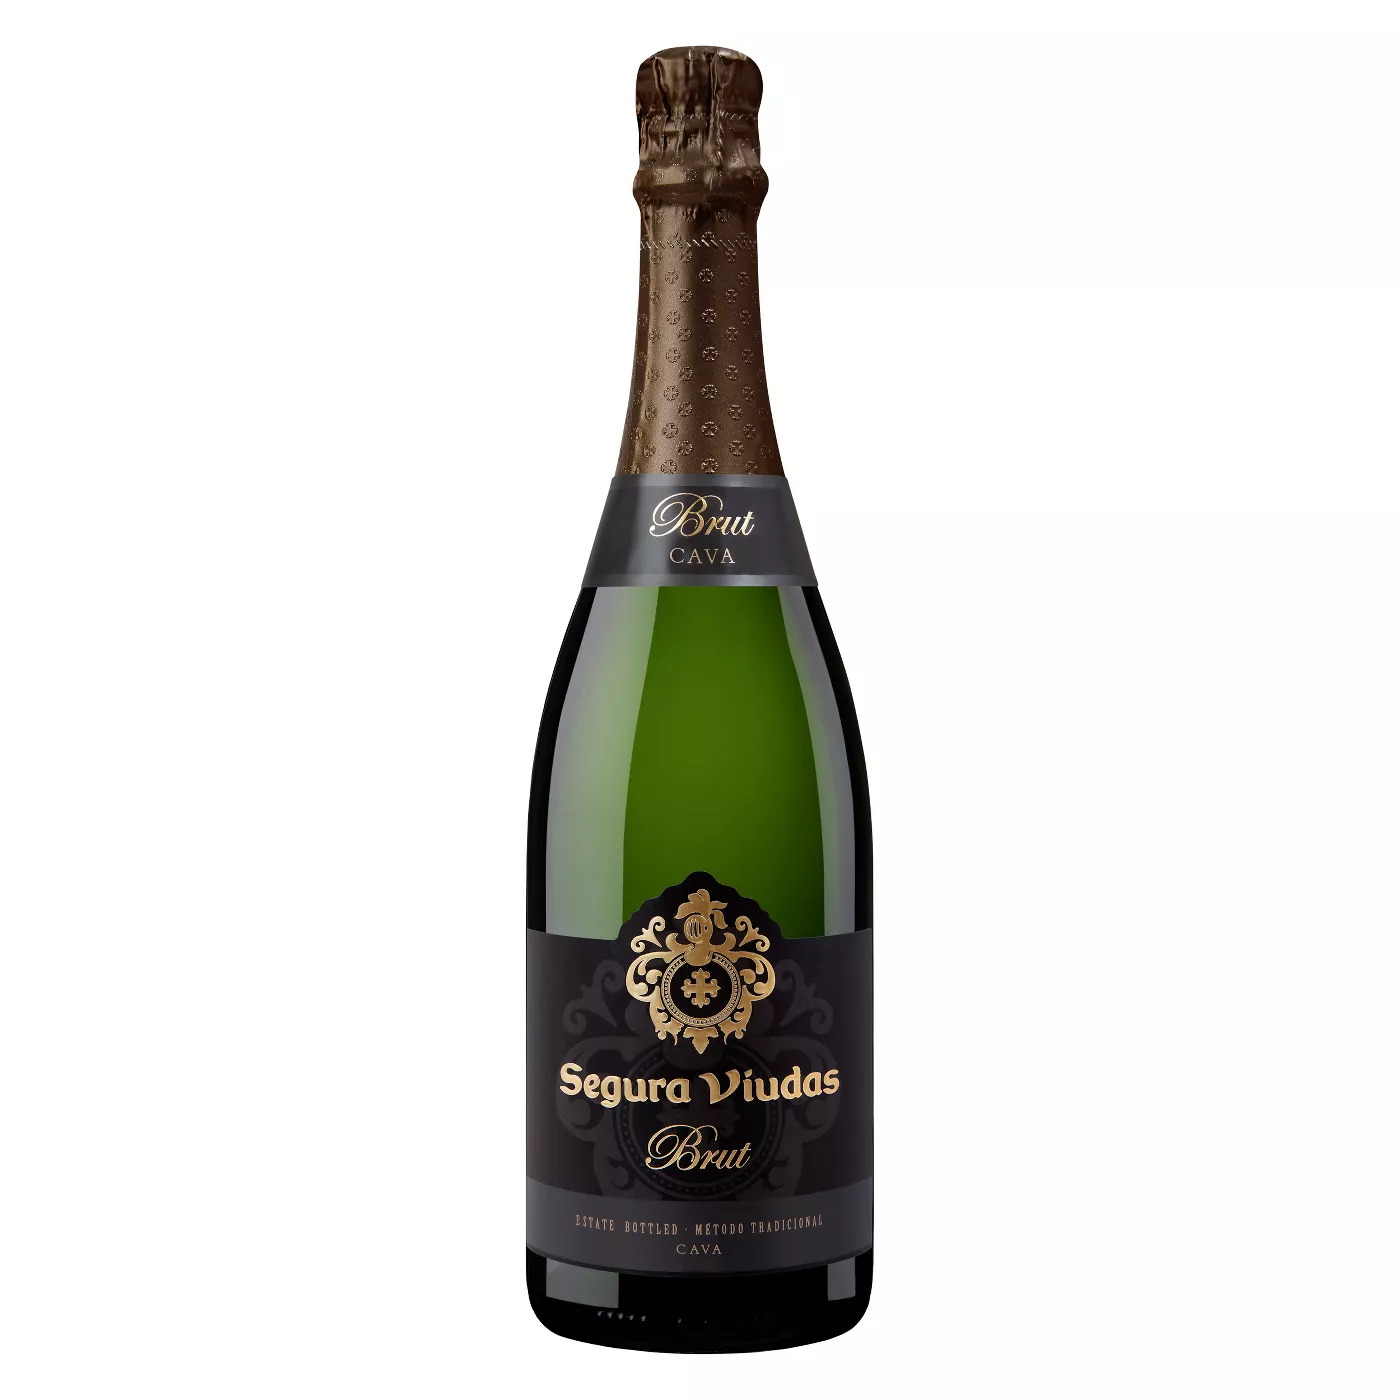 Segura Viudas Brut Cava Sparkling Wine - 750ml Bottle - image 1 of 1